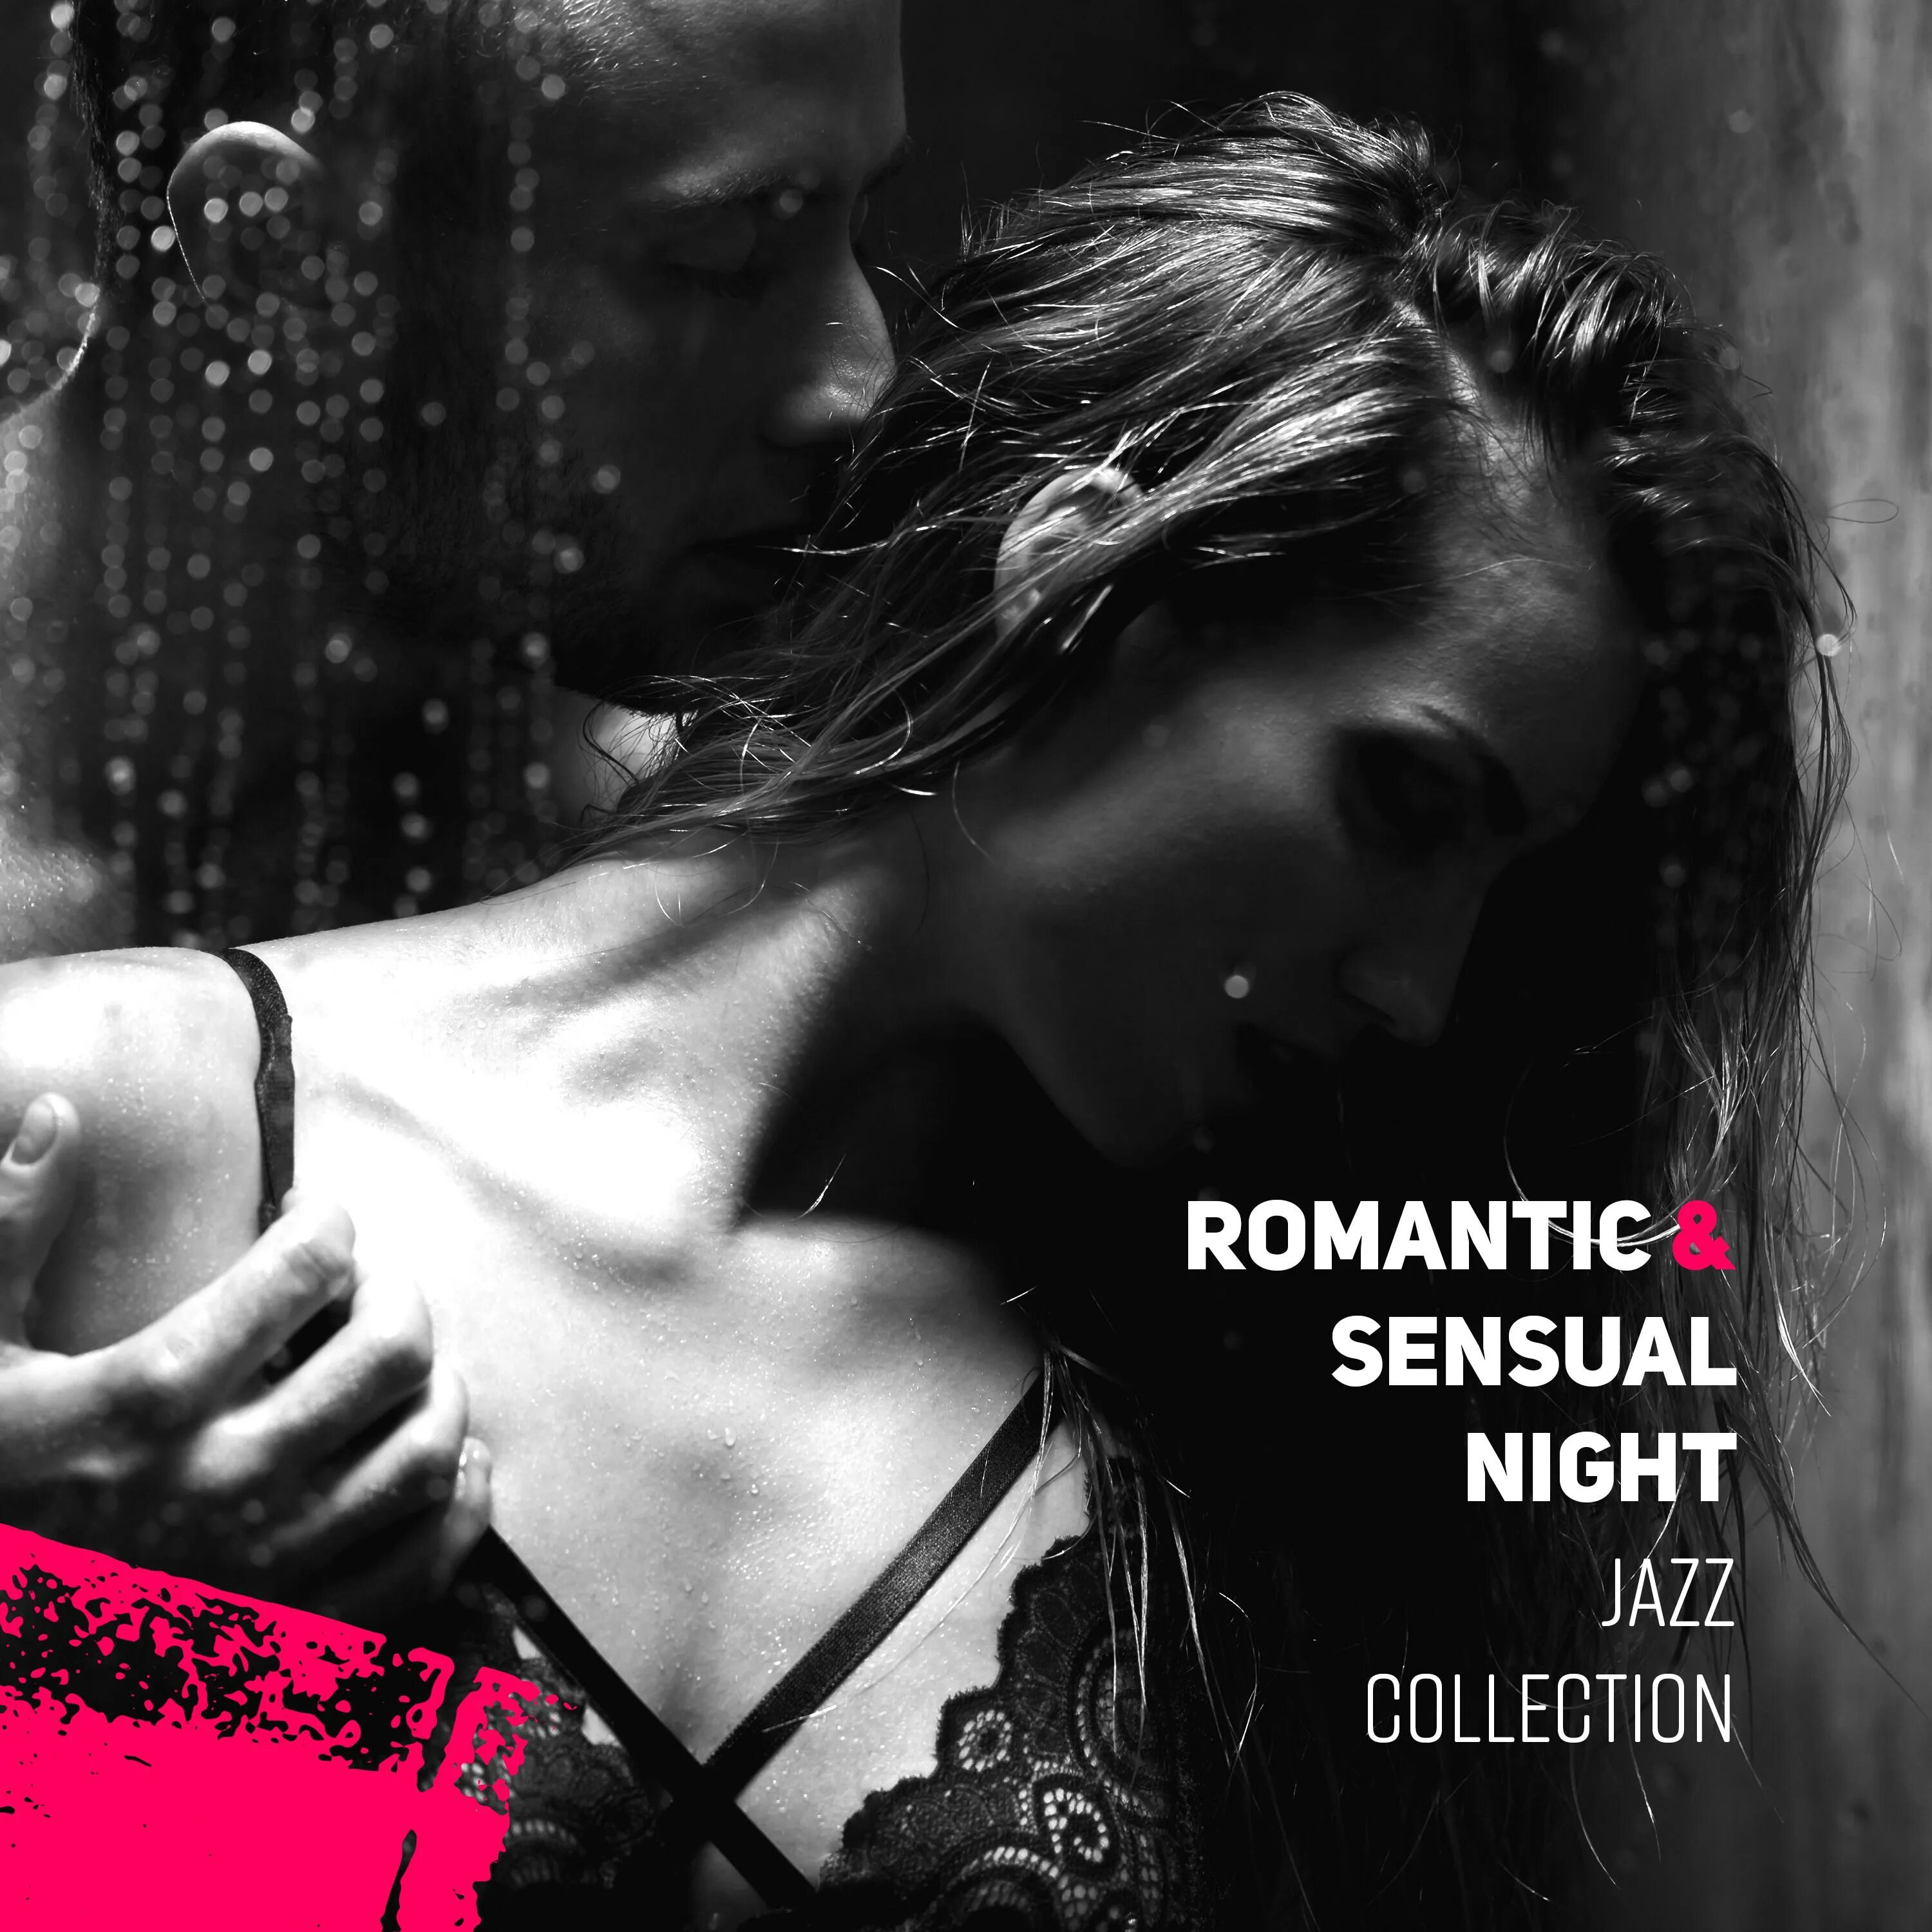 Sensual записи. Чувственные треки. Romantic collection Jazz. Sensuous Night. Janet Seidel Midnight Jazz.